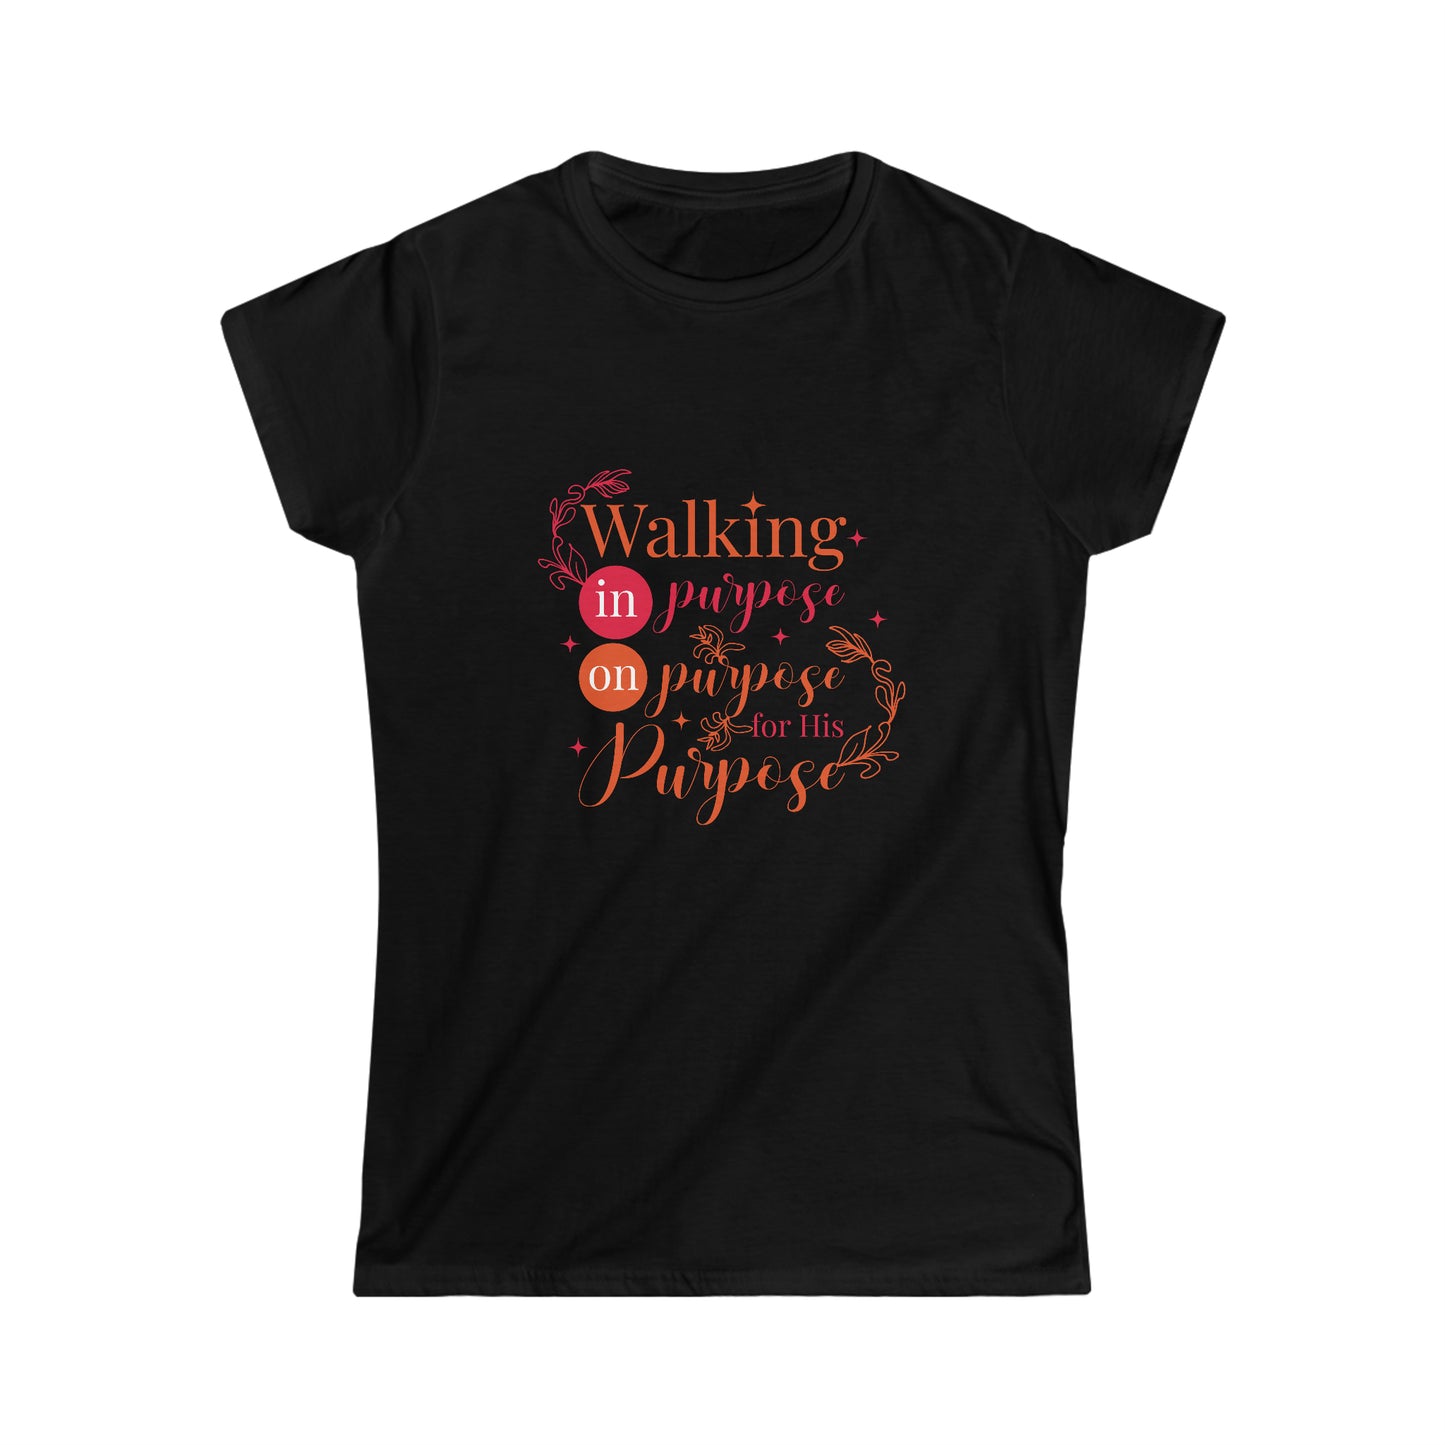 Walking On Purpose In Purpose For His Purpose Women's T-shirt